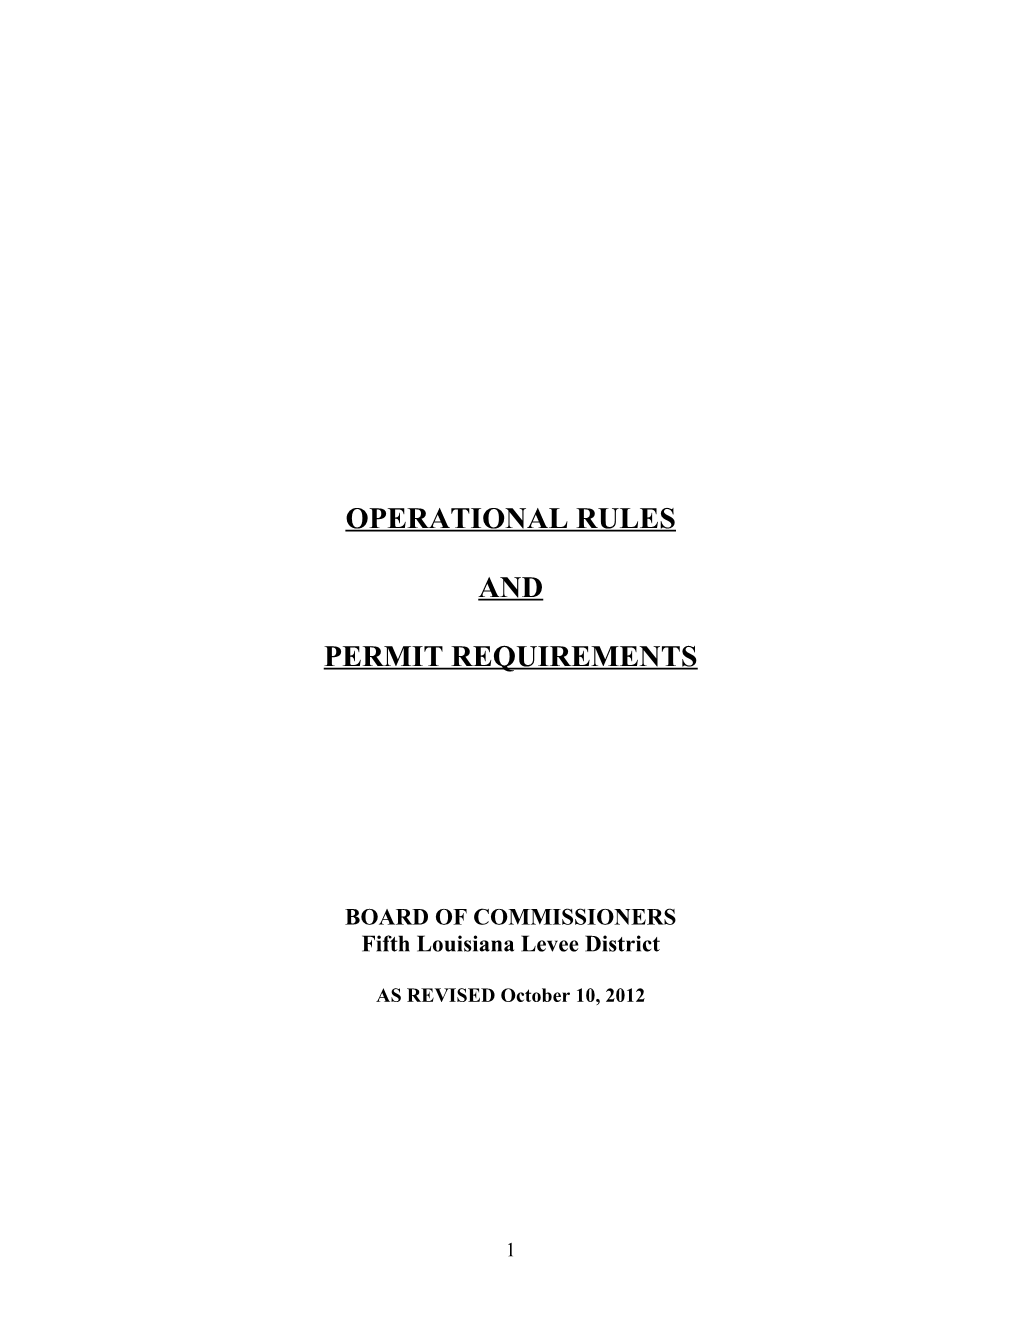 Operational Rules